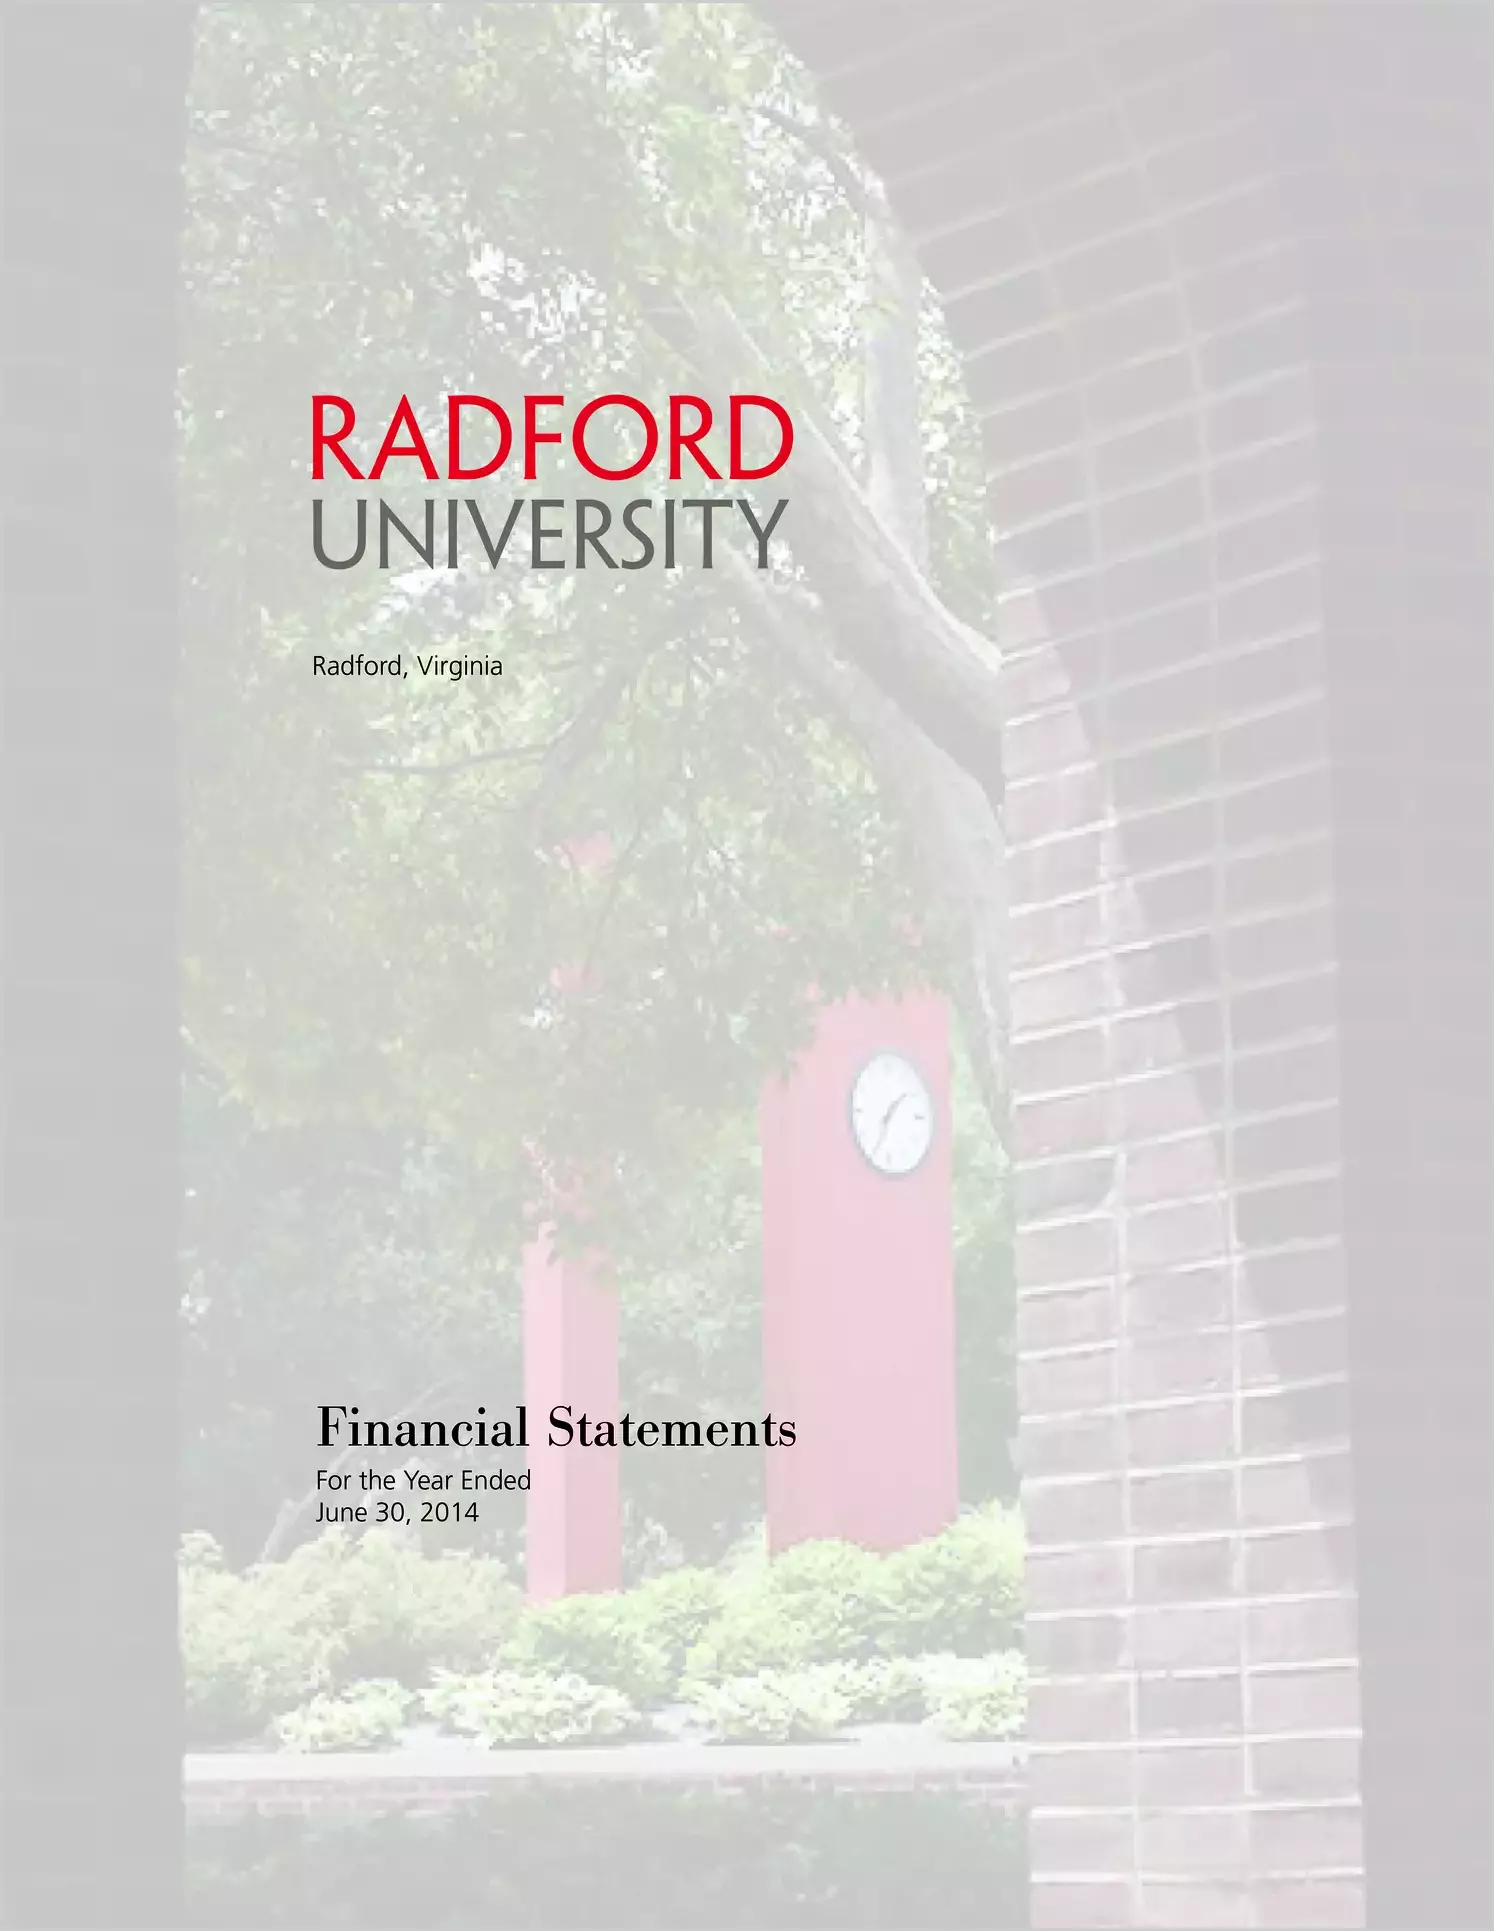 Radford University Financial Statement for year ending June 30, 2014